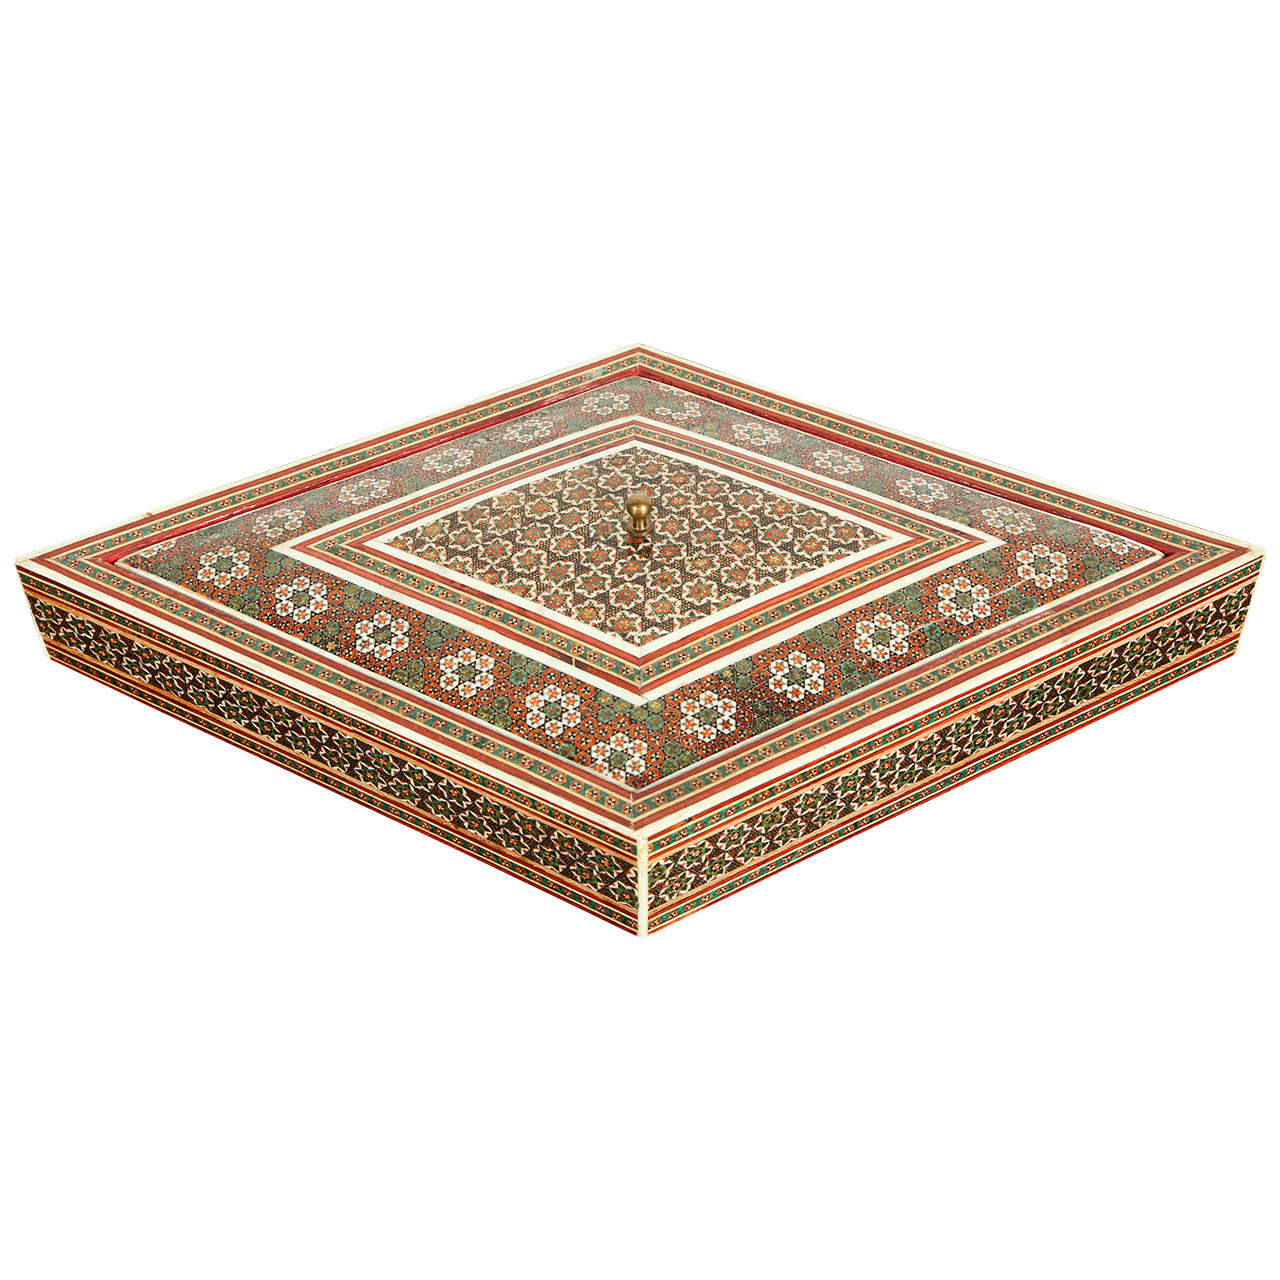 Anglo-Indian Micro Mosaic Inlaid Box